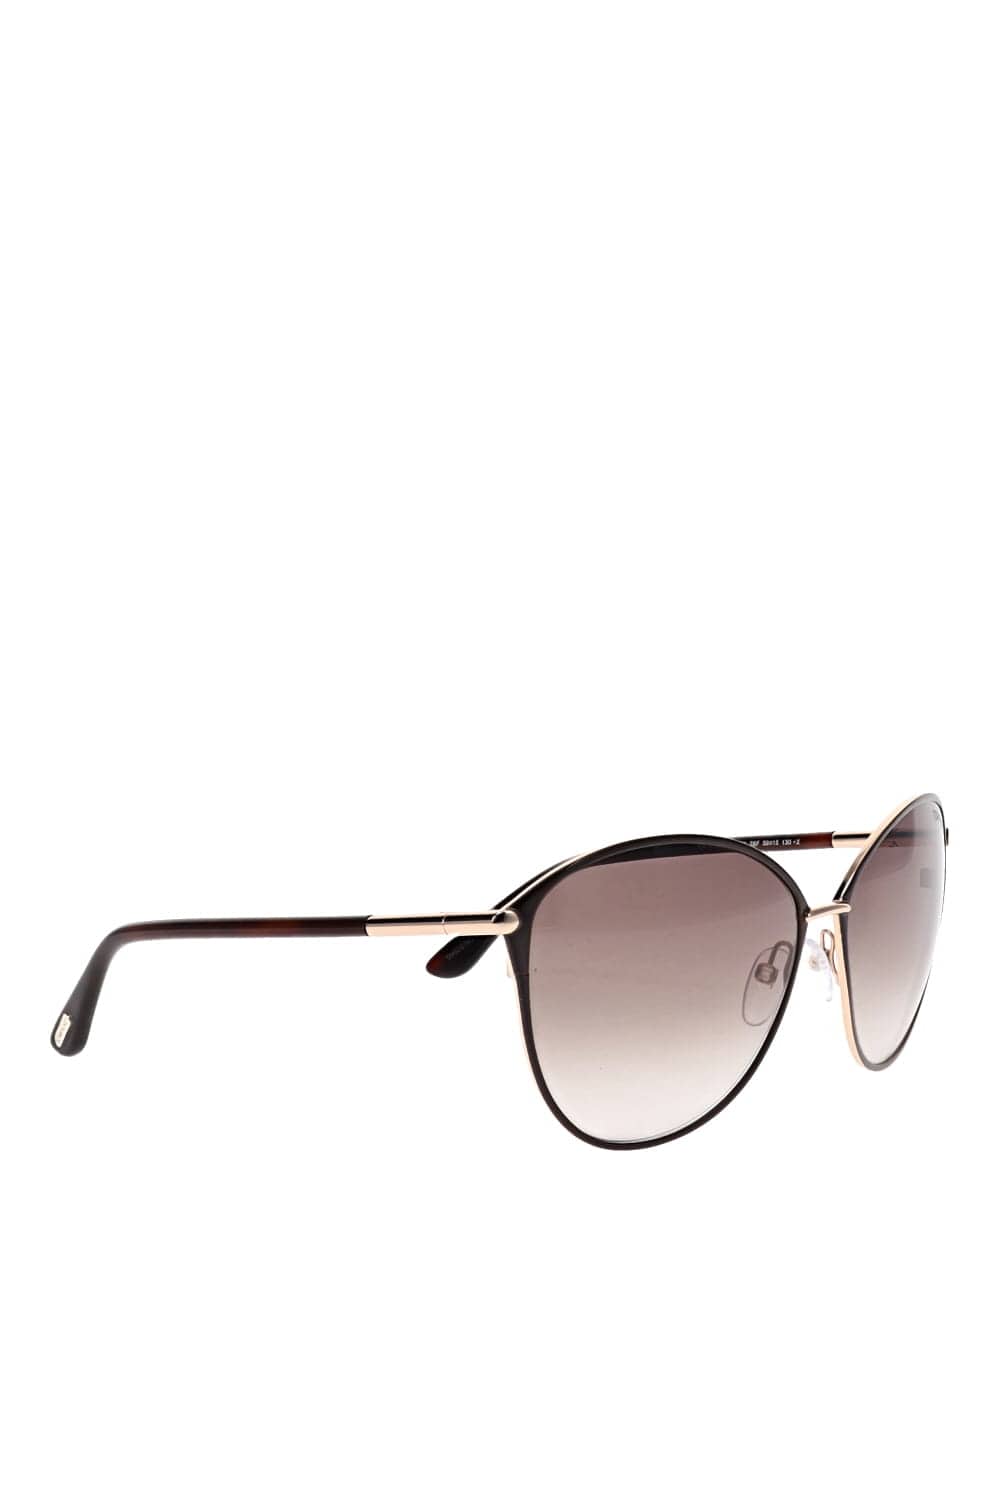 Tom Ford Eyewear FT0320 Shiny Dark Brown Sunglasses FT0320 Dark Brown Gradient